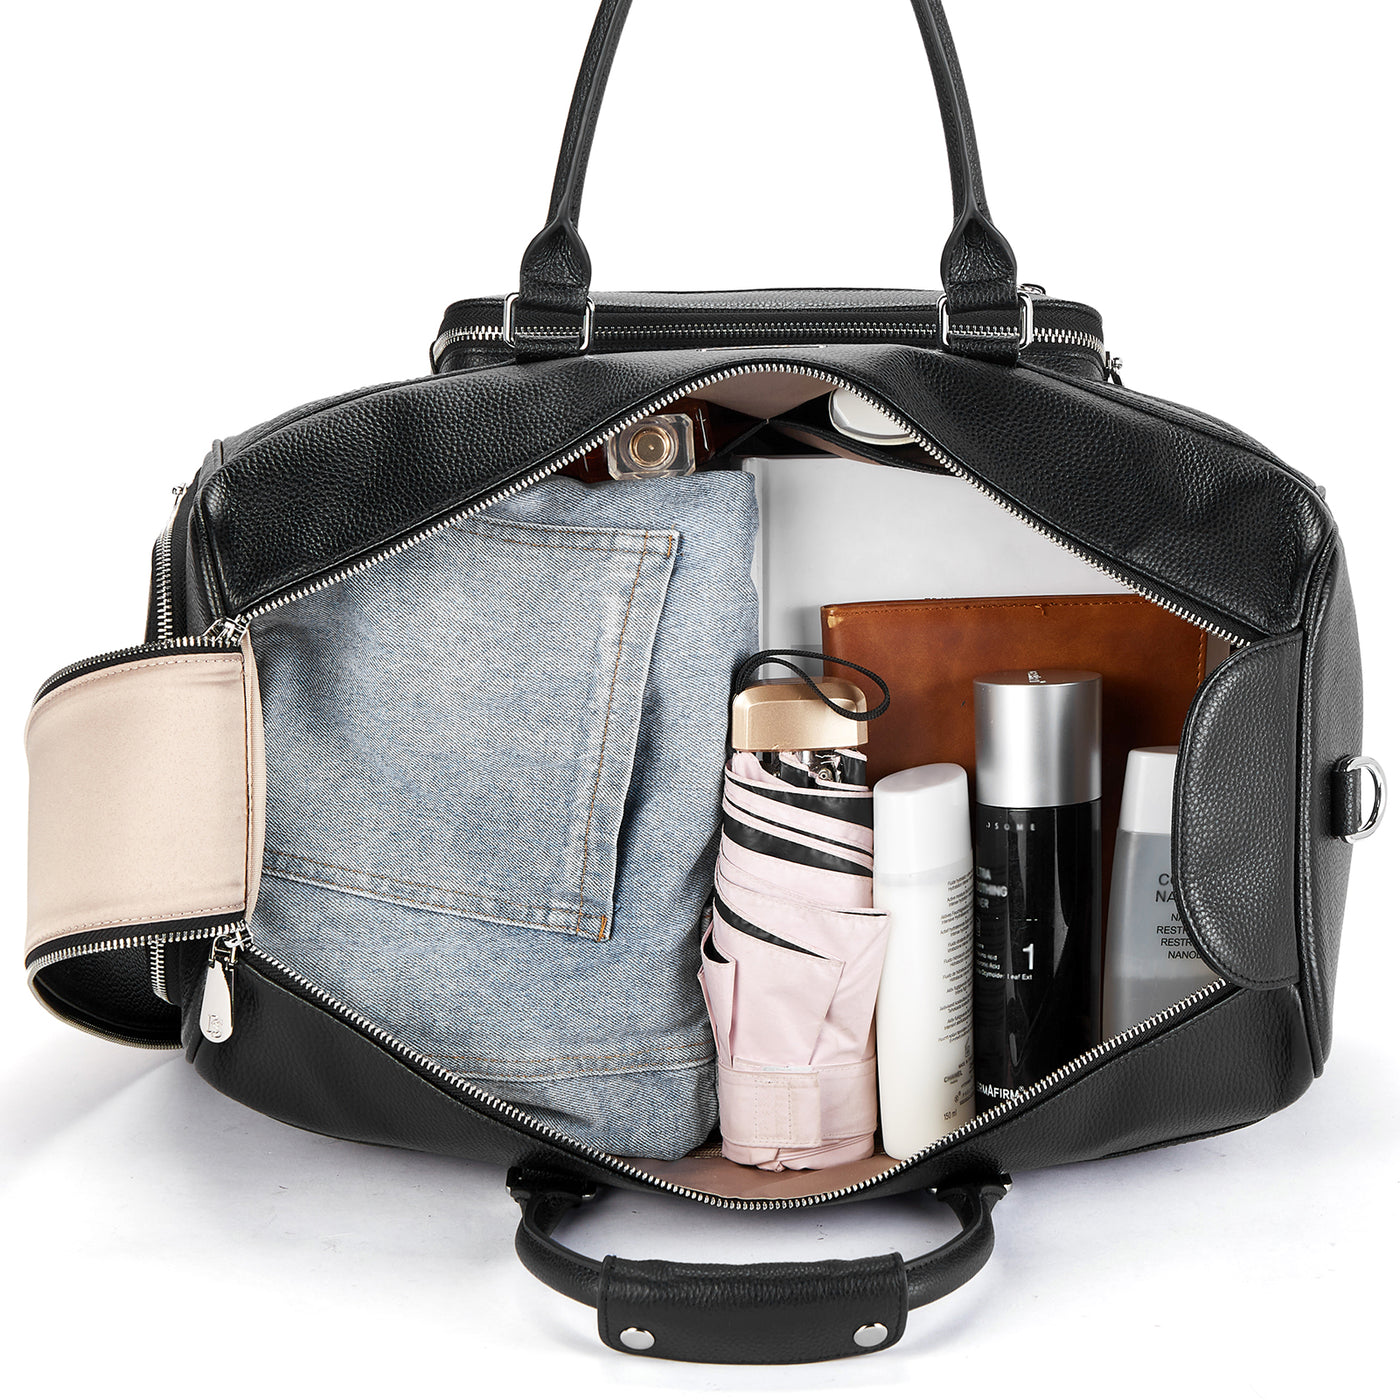 BOSTANTEN Man/Women Travel Duffel Bag Unisex Gym Sports Luggage Large Capacity Tote Duffel Bags - BOSTANTEN